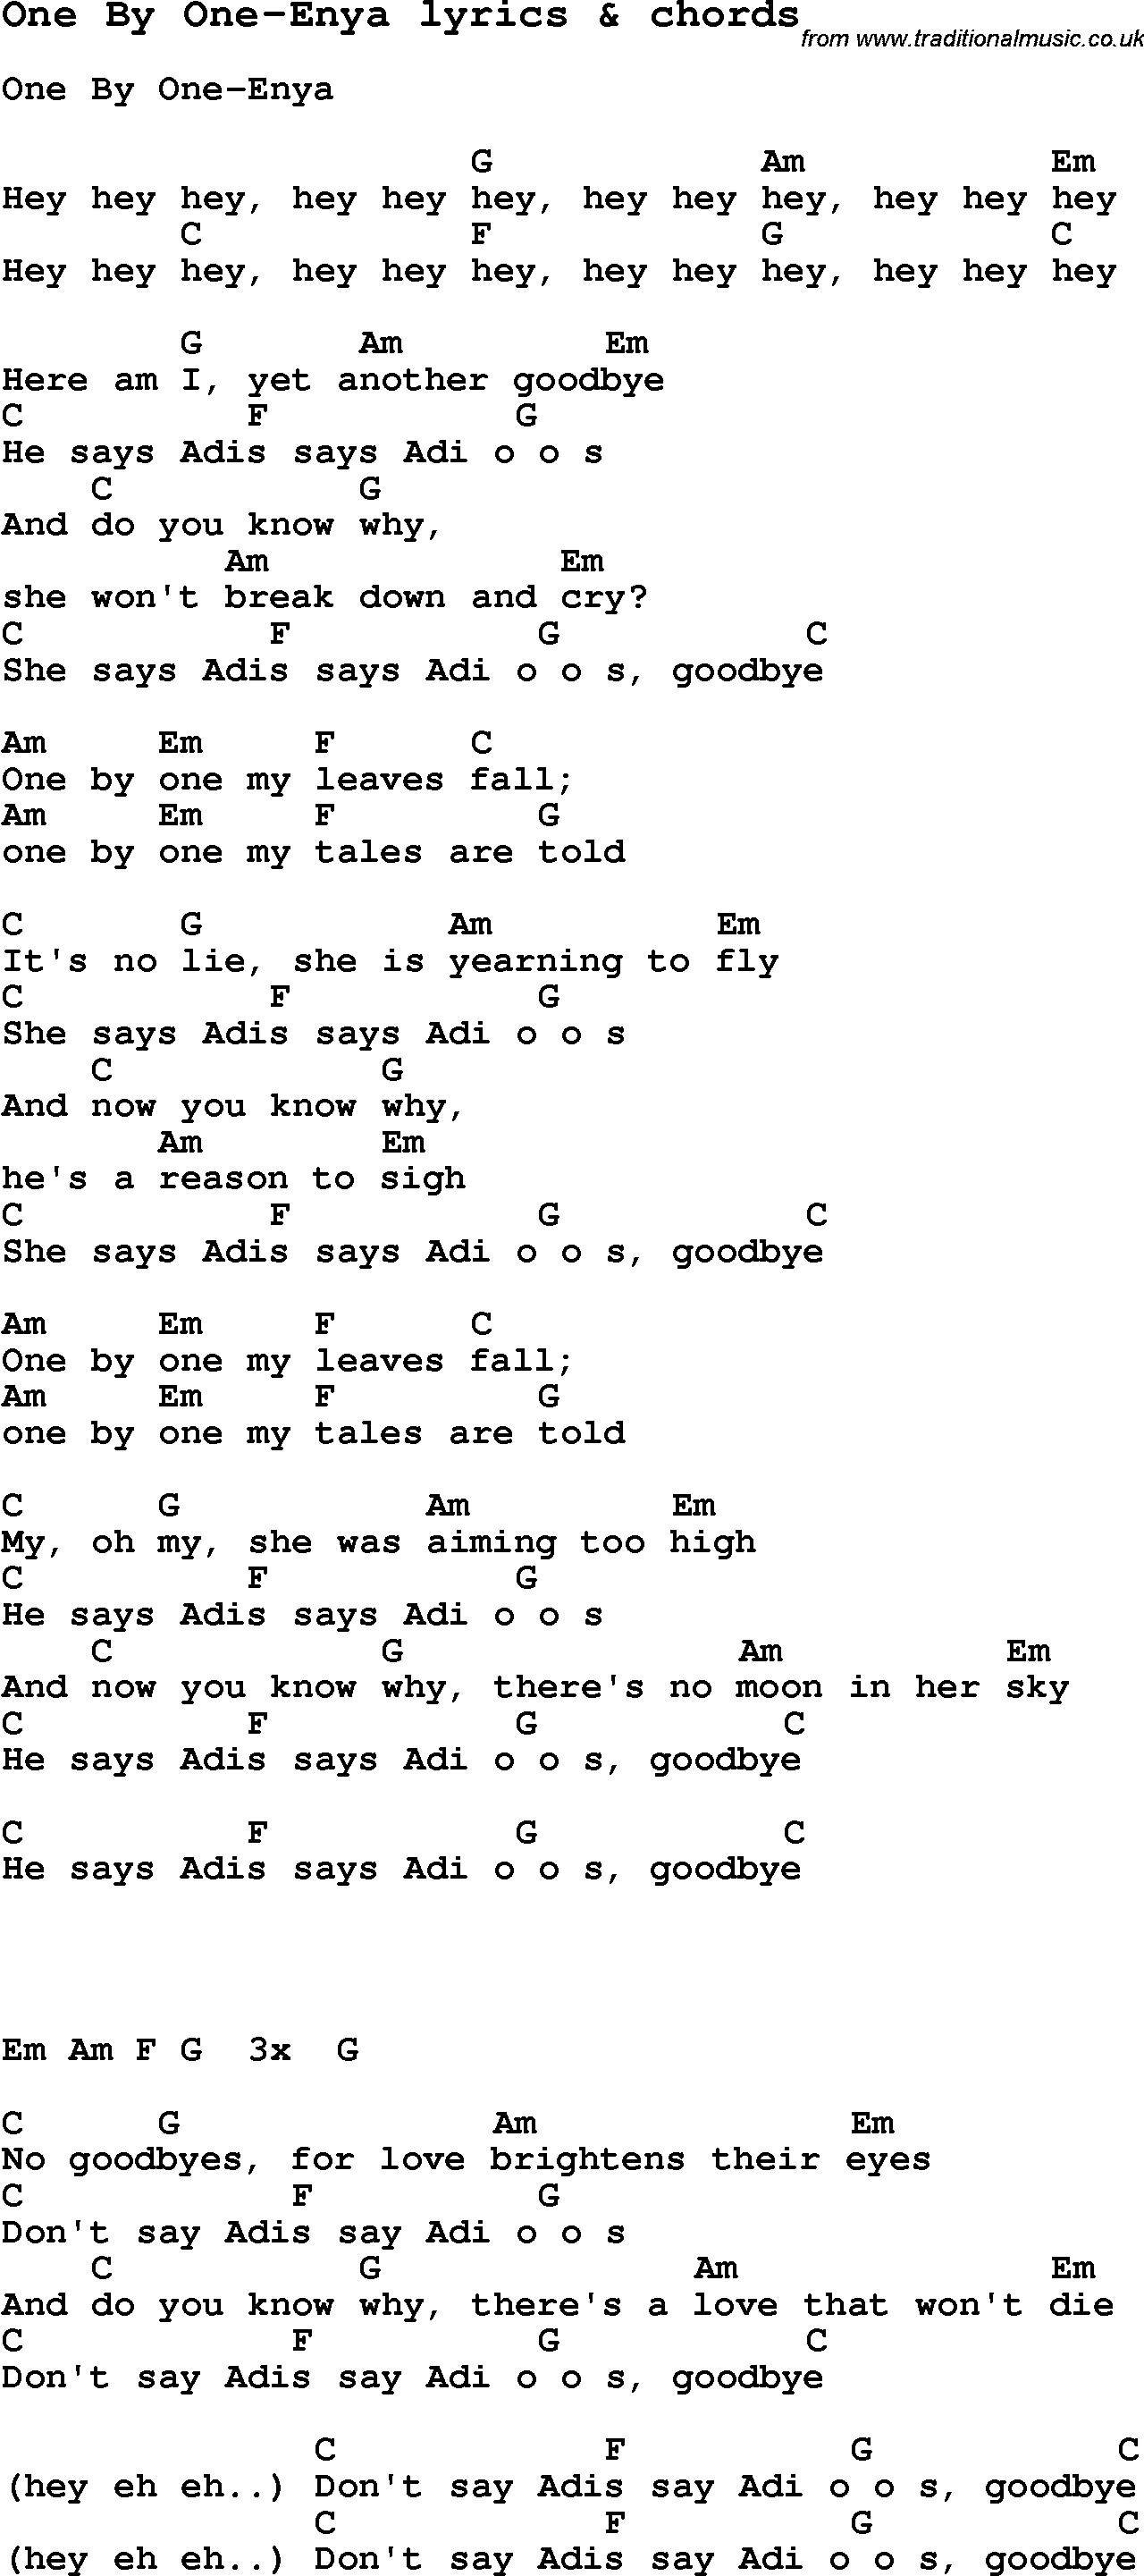 Love Song Lyrics for: One By One-Enya with chords for Ukulele, Guitar Banjo etc.